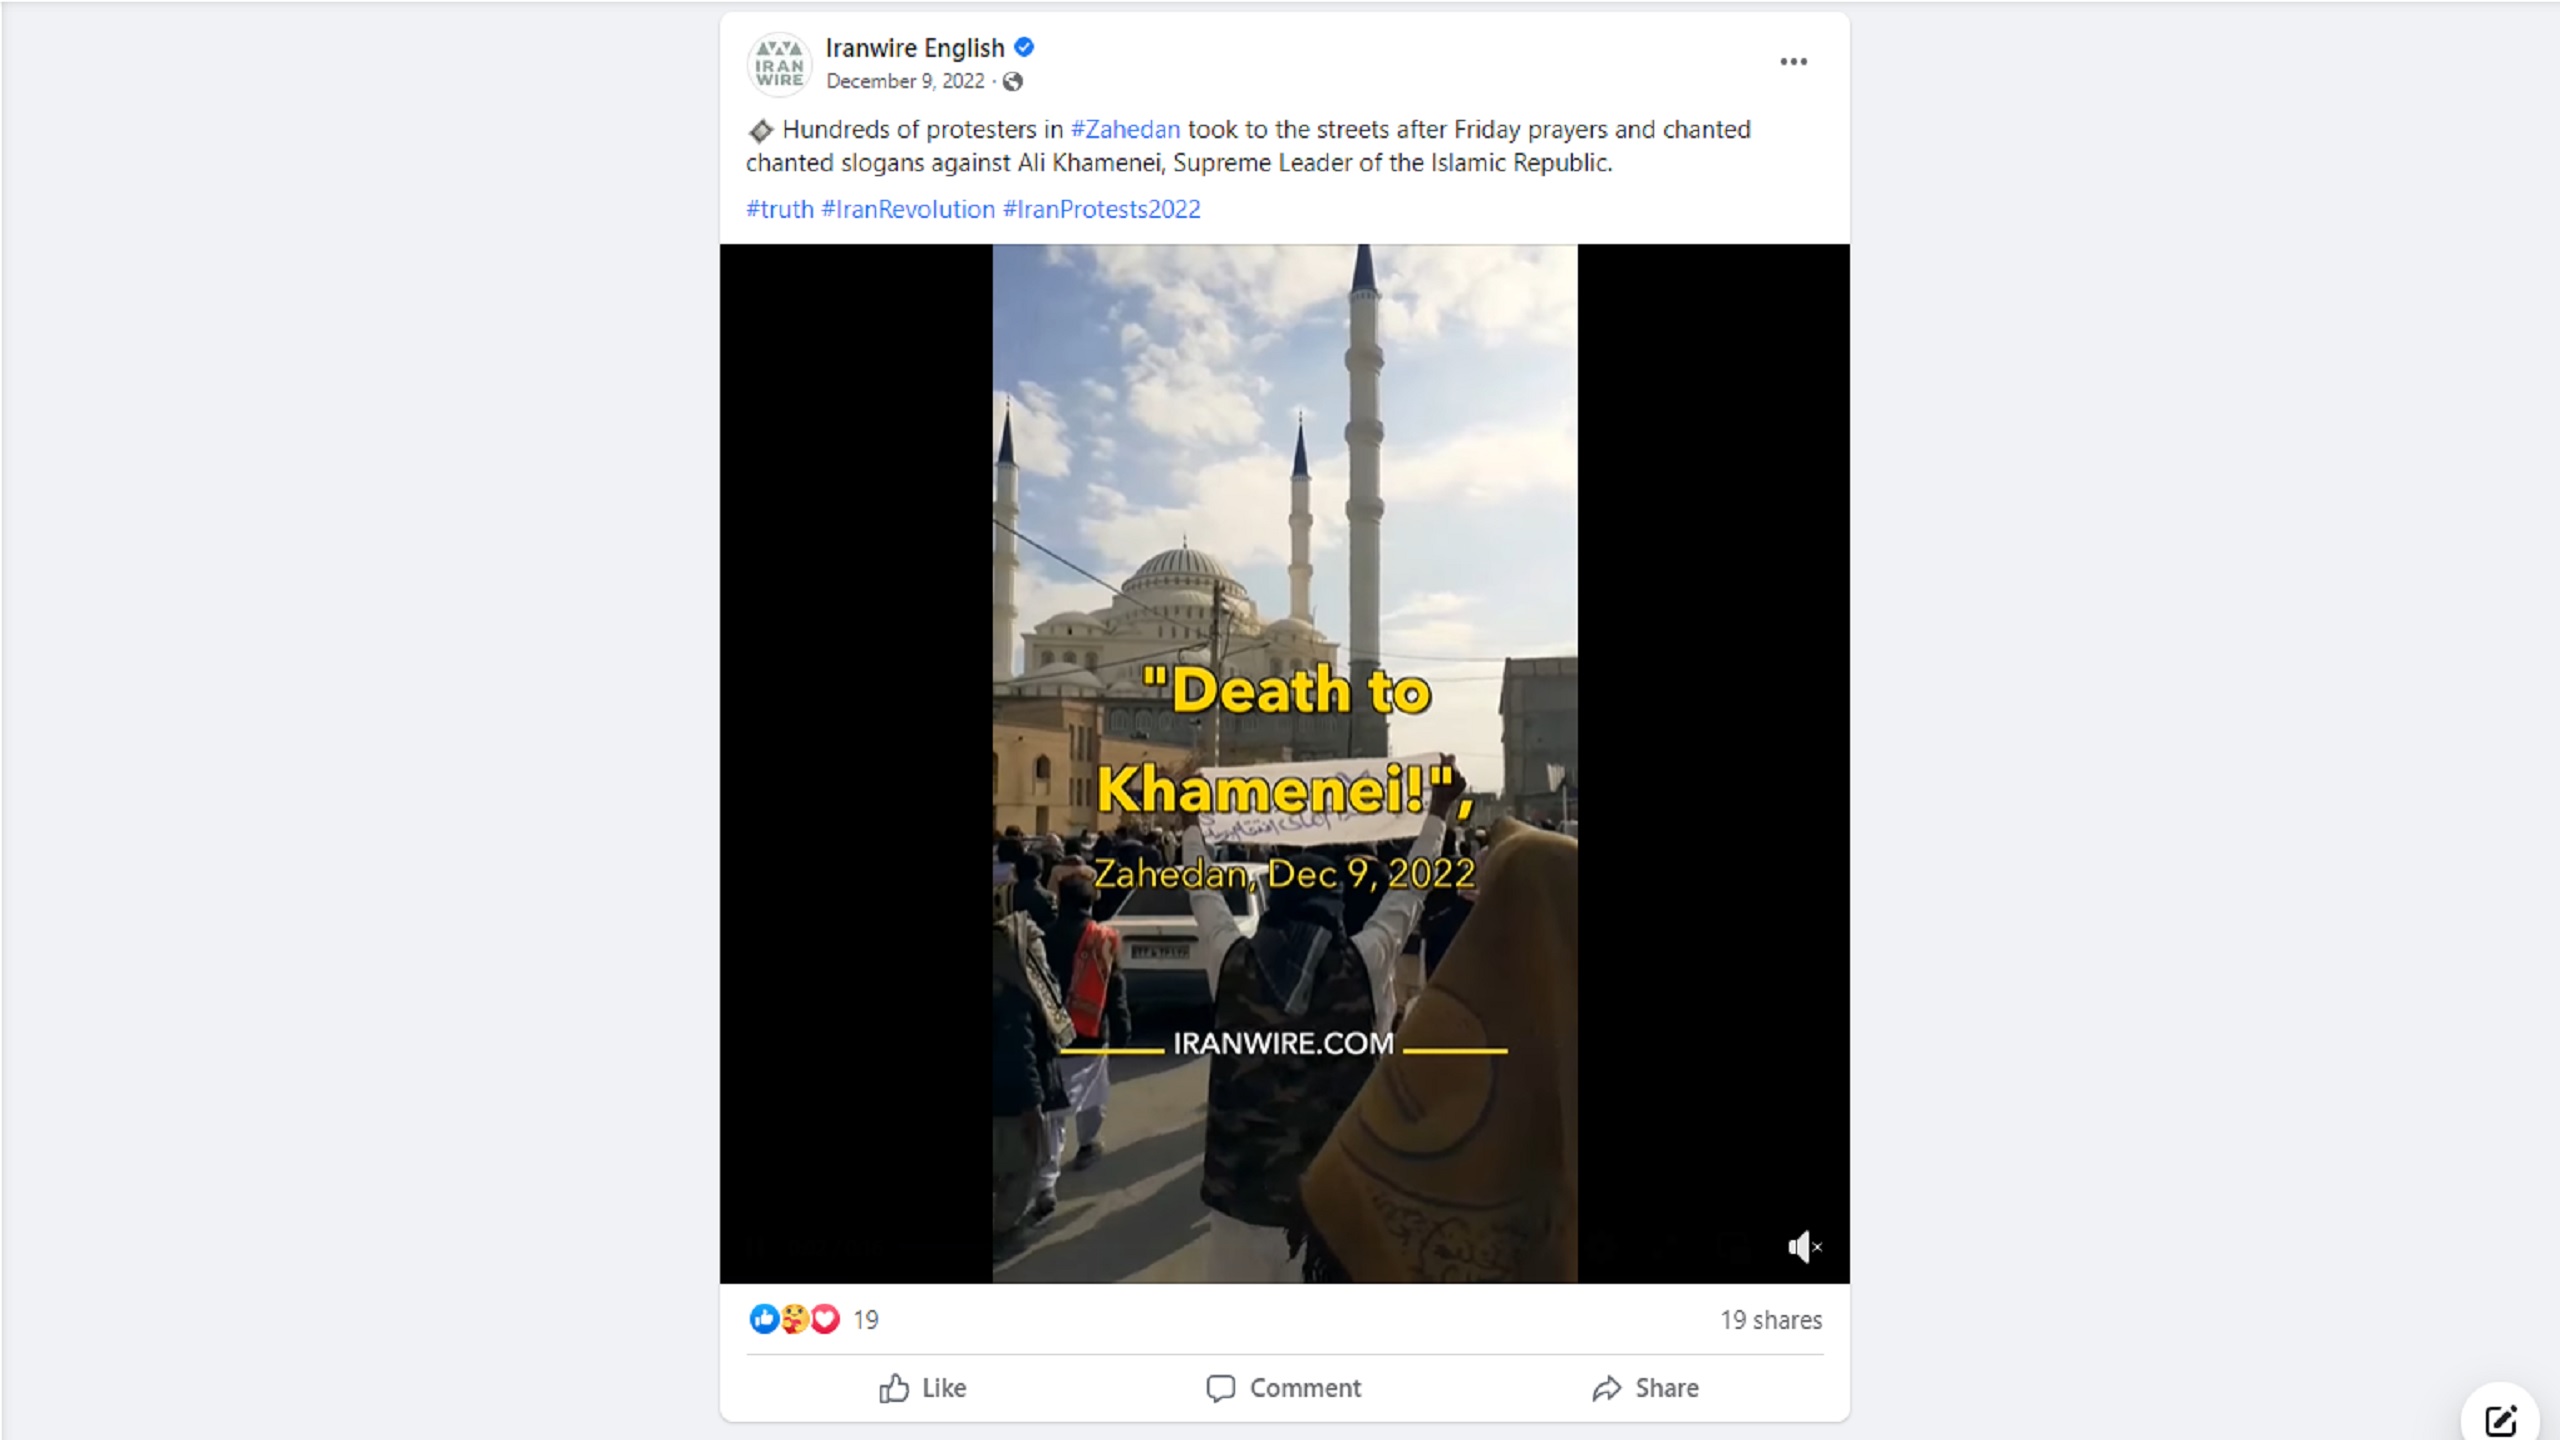 Meta Oversight Board Allows Facebook Post Calling for ‘Death to Khamenei’